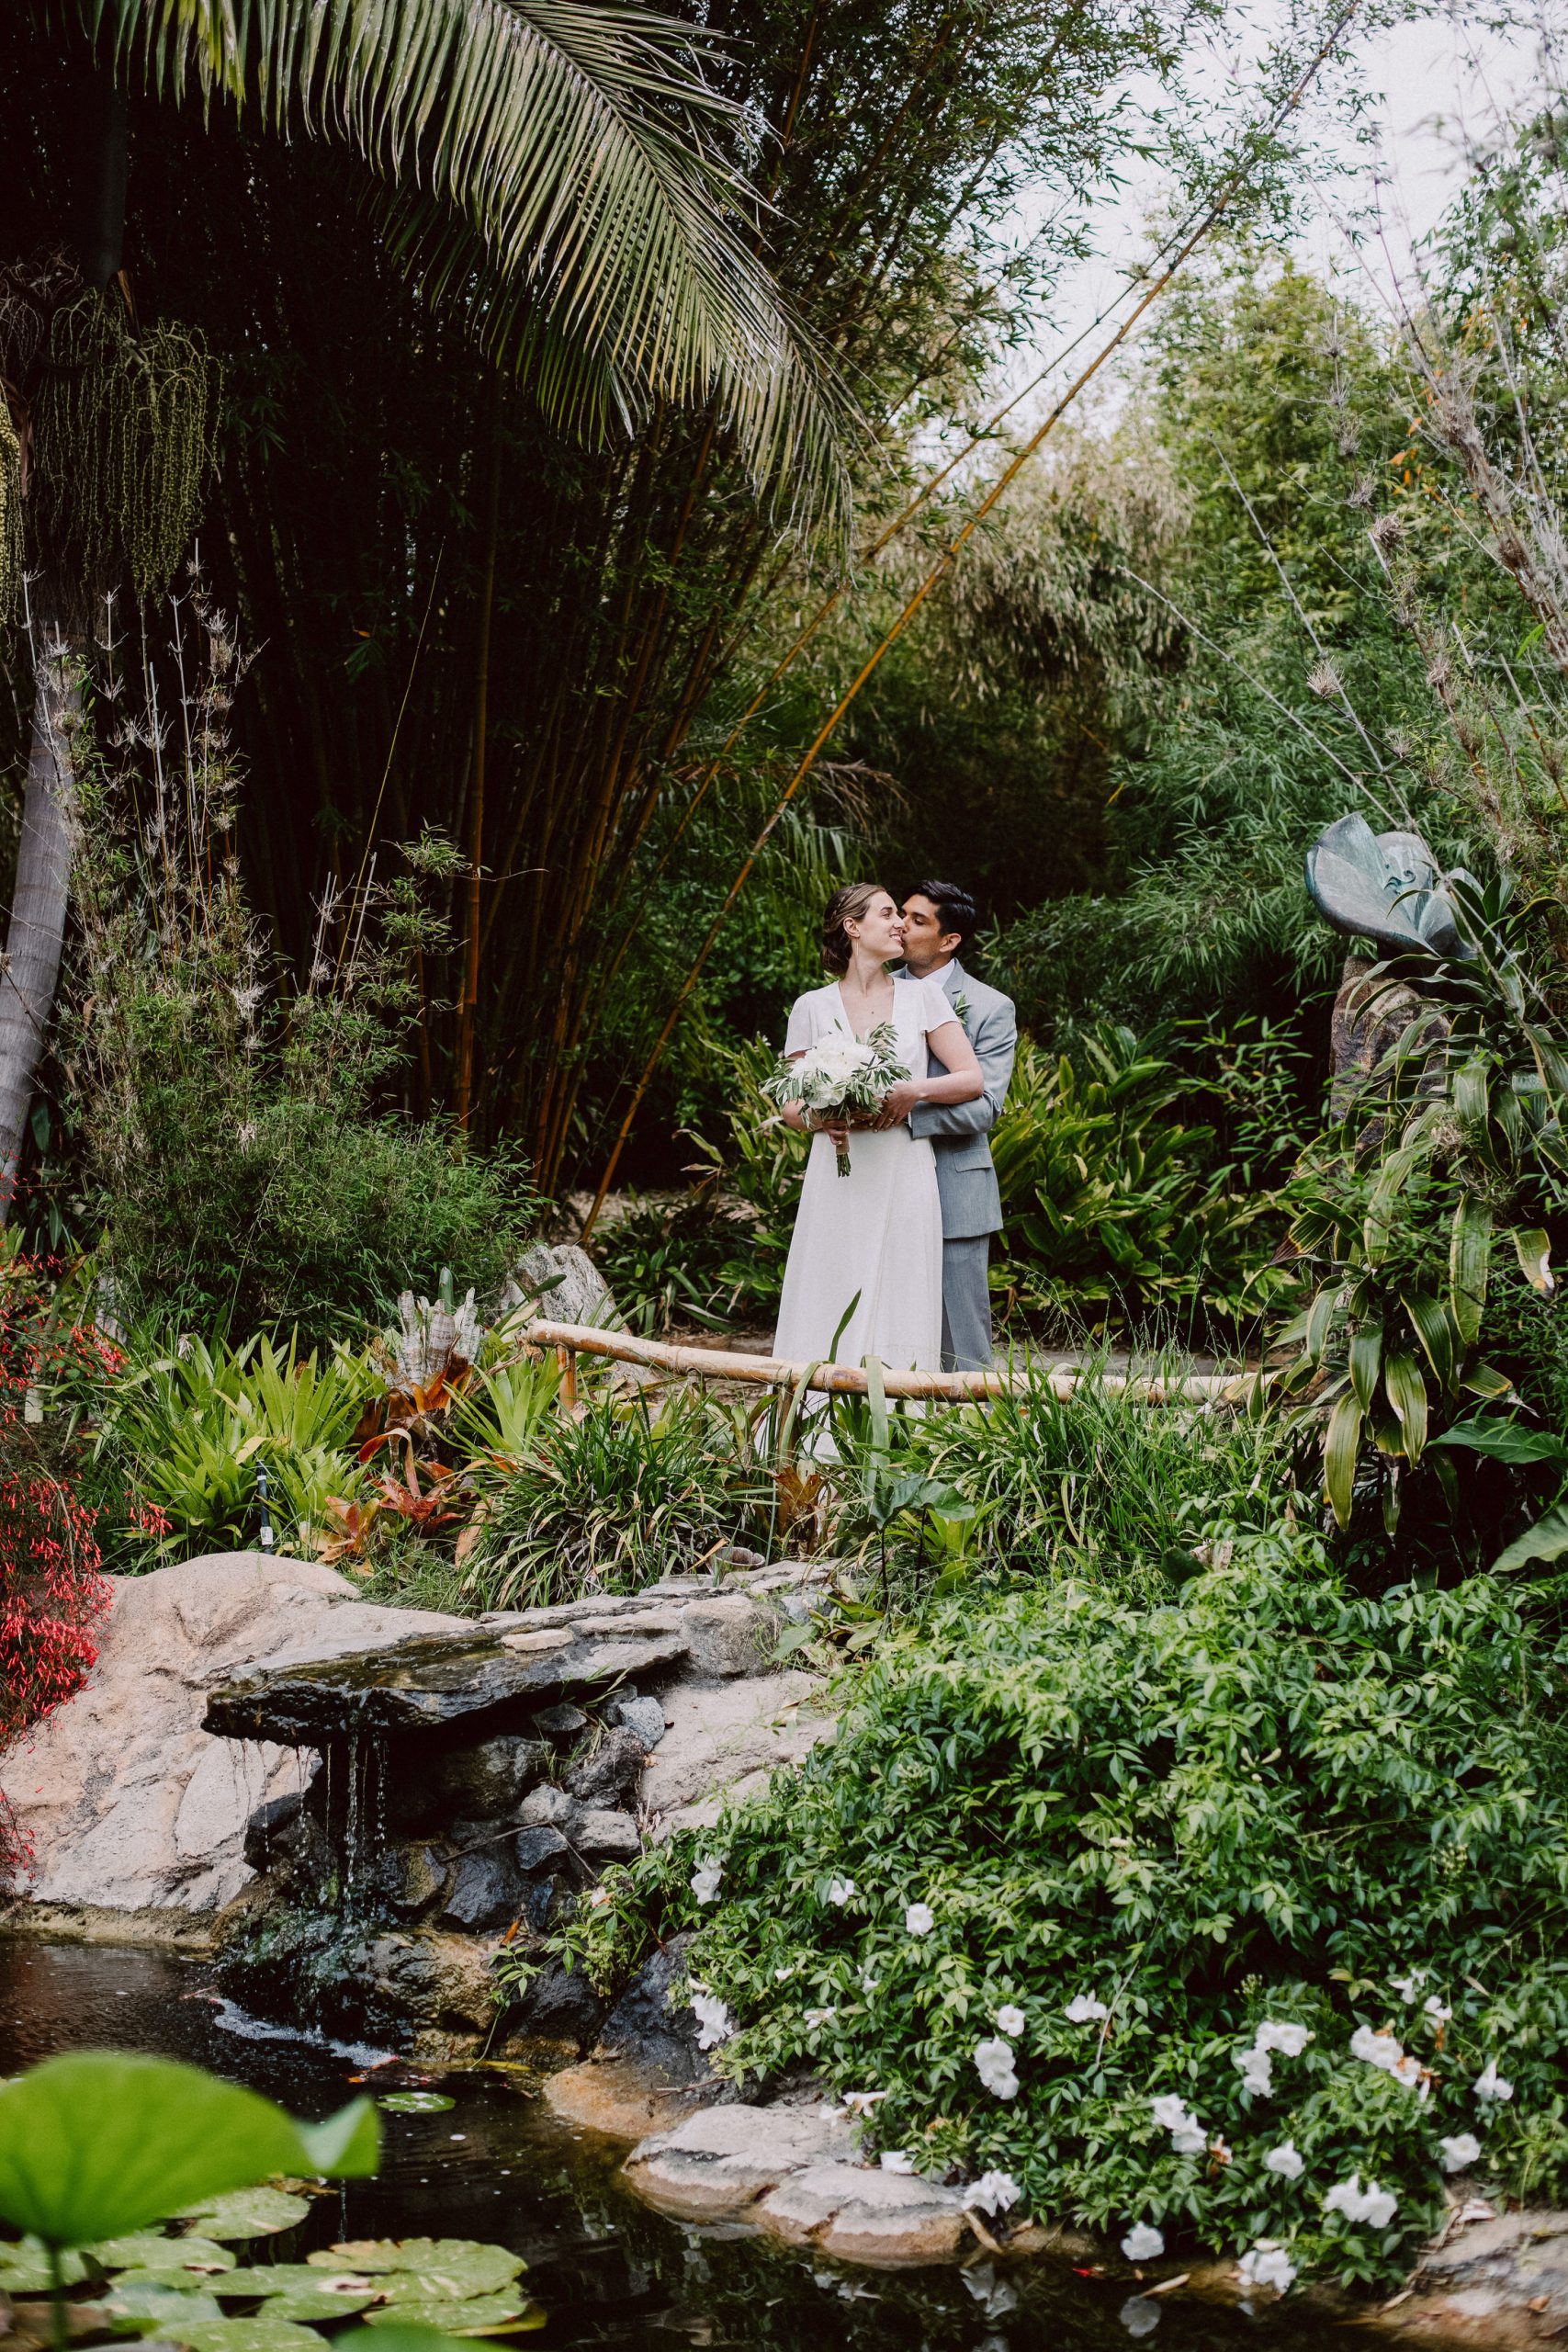 Bride and groom botanic garden portrait session.